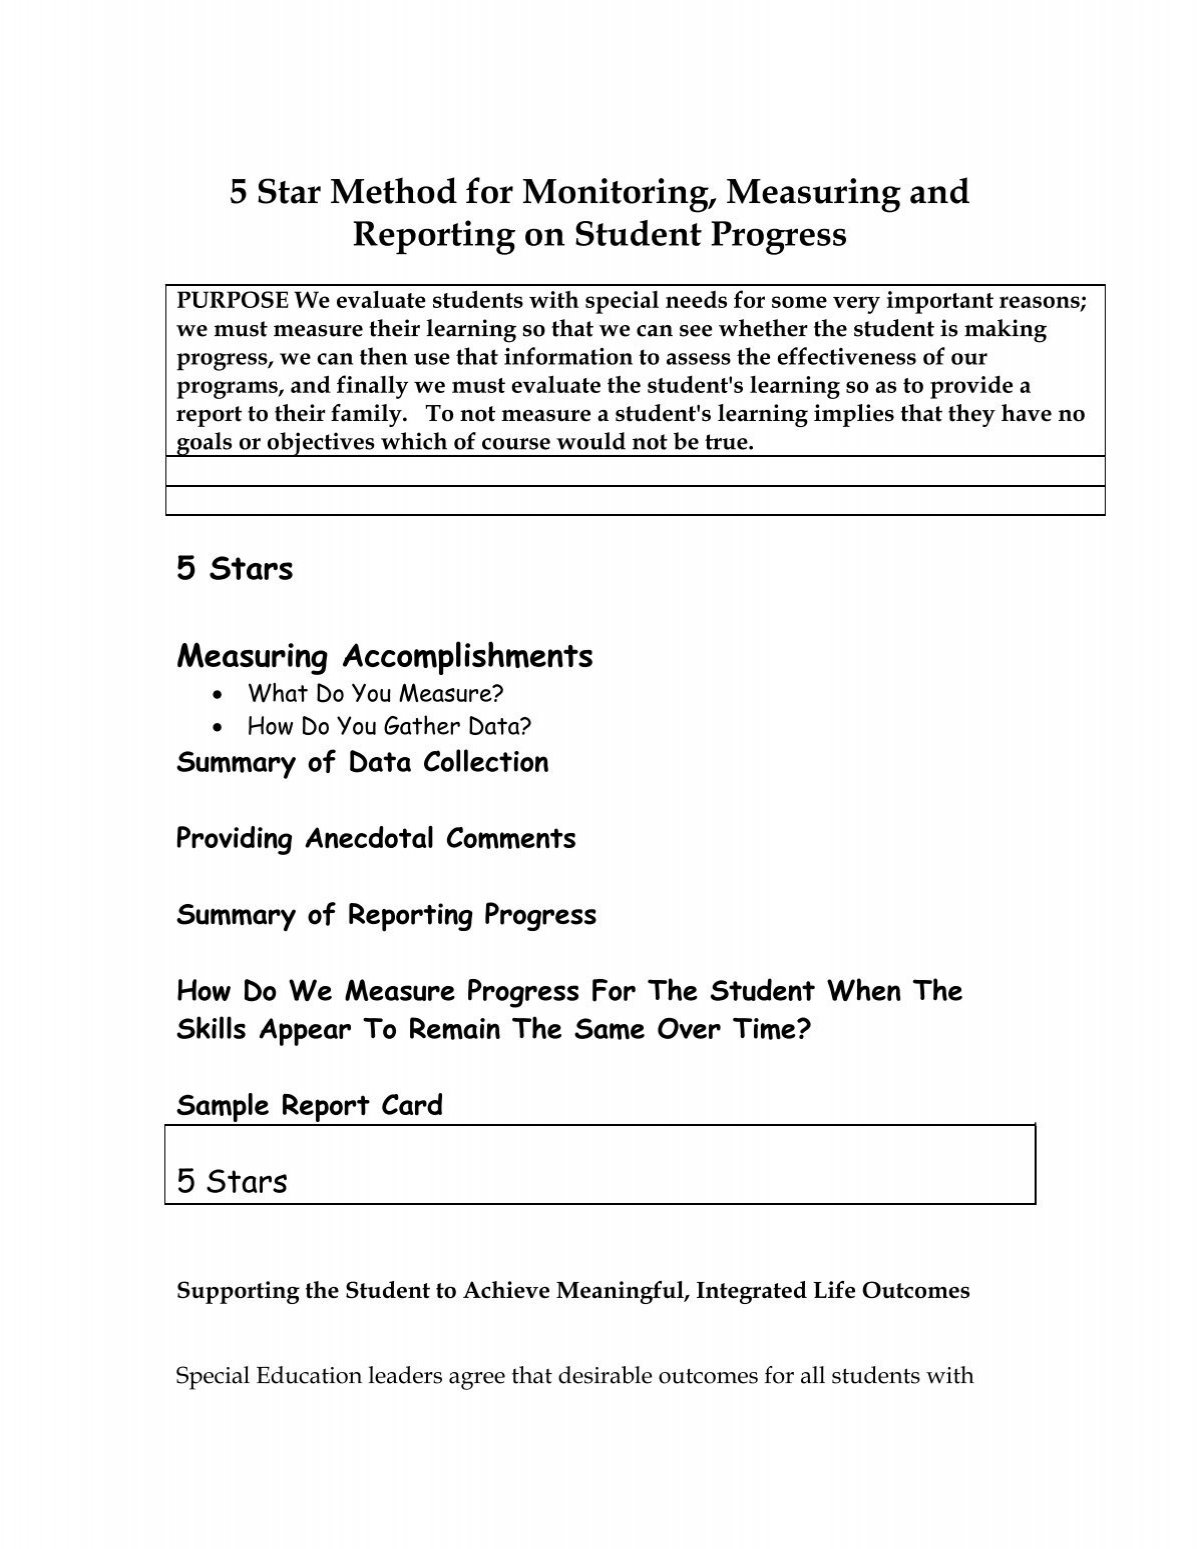 5 Star Method For Measuring & Reporting Student Progress